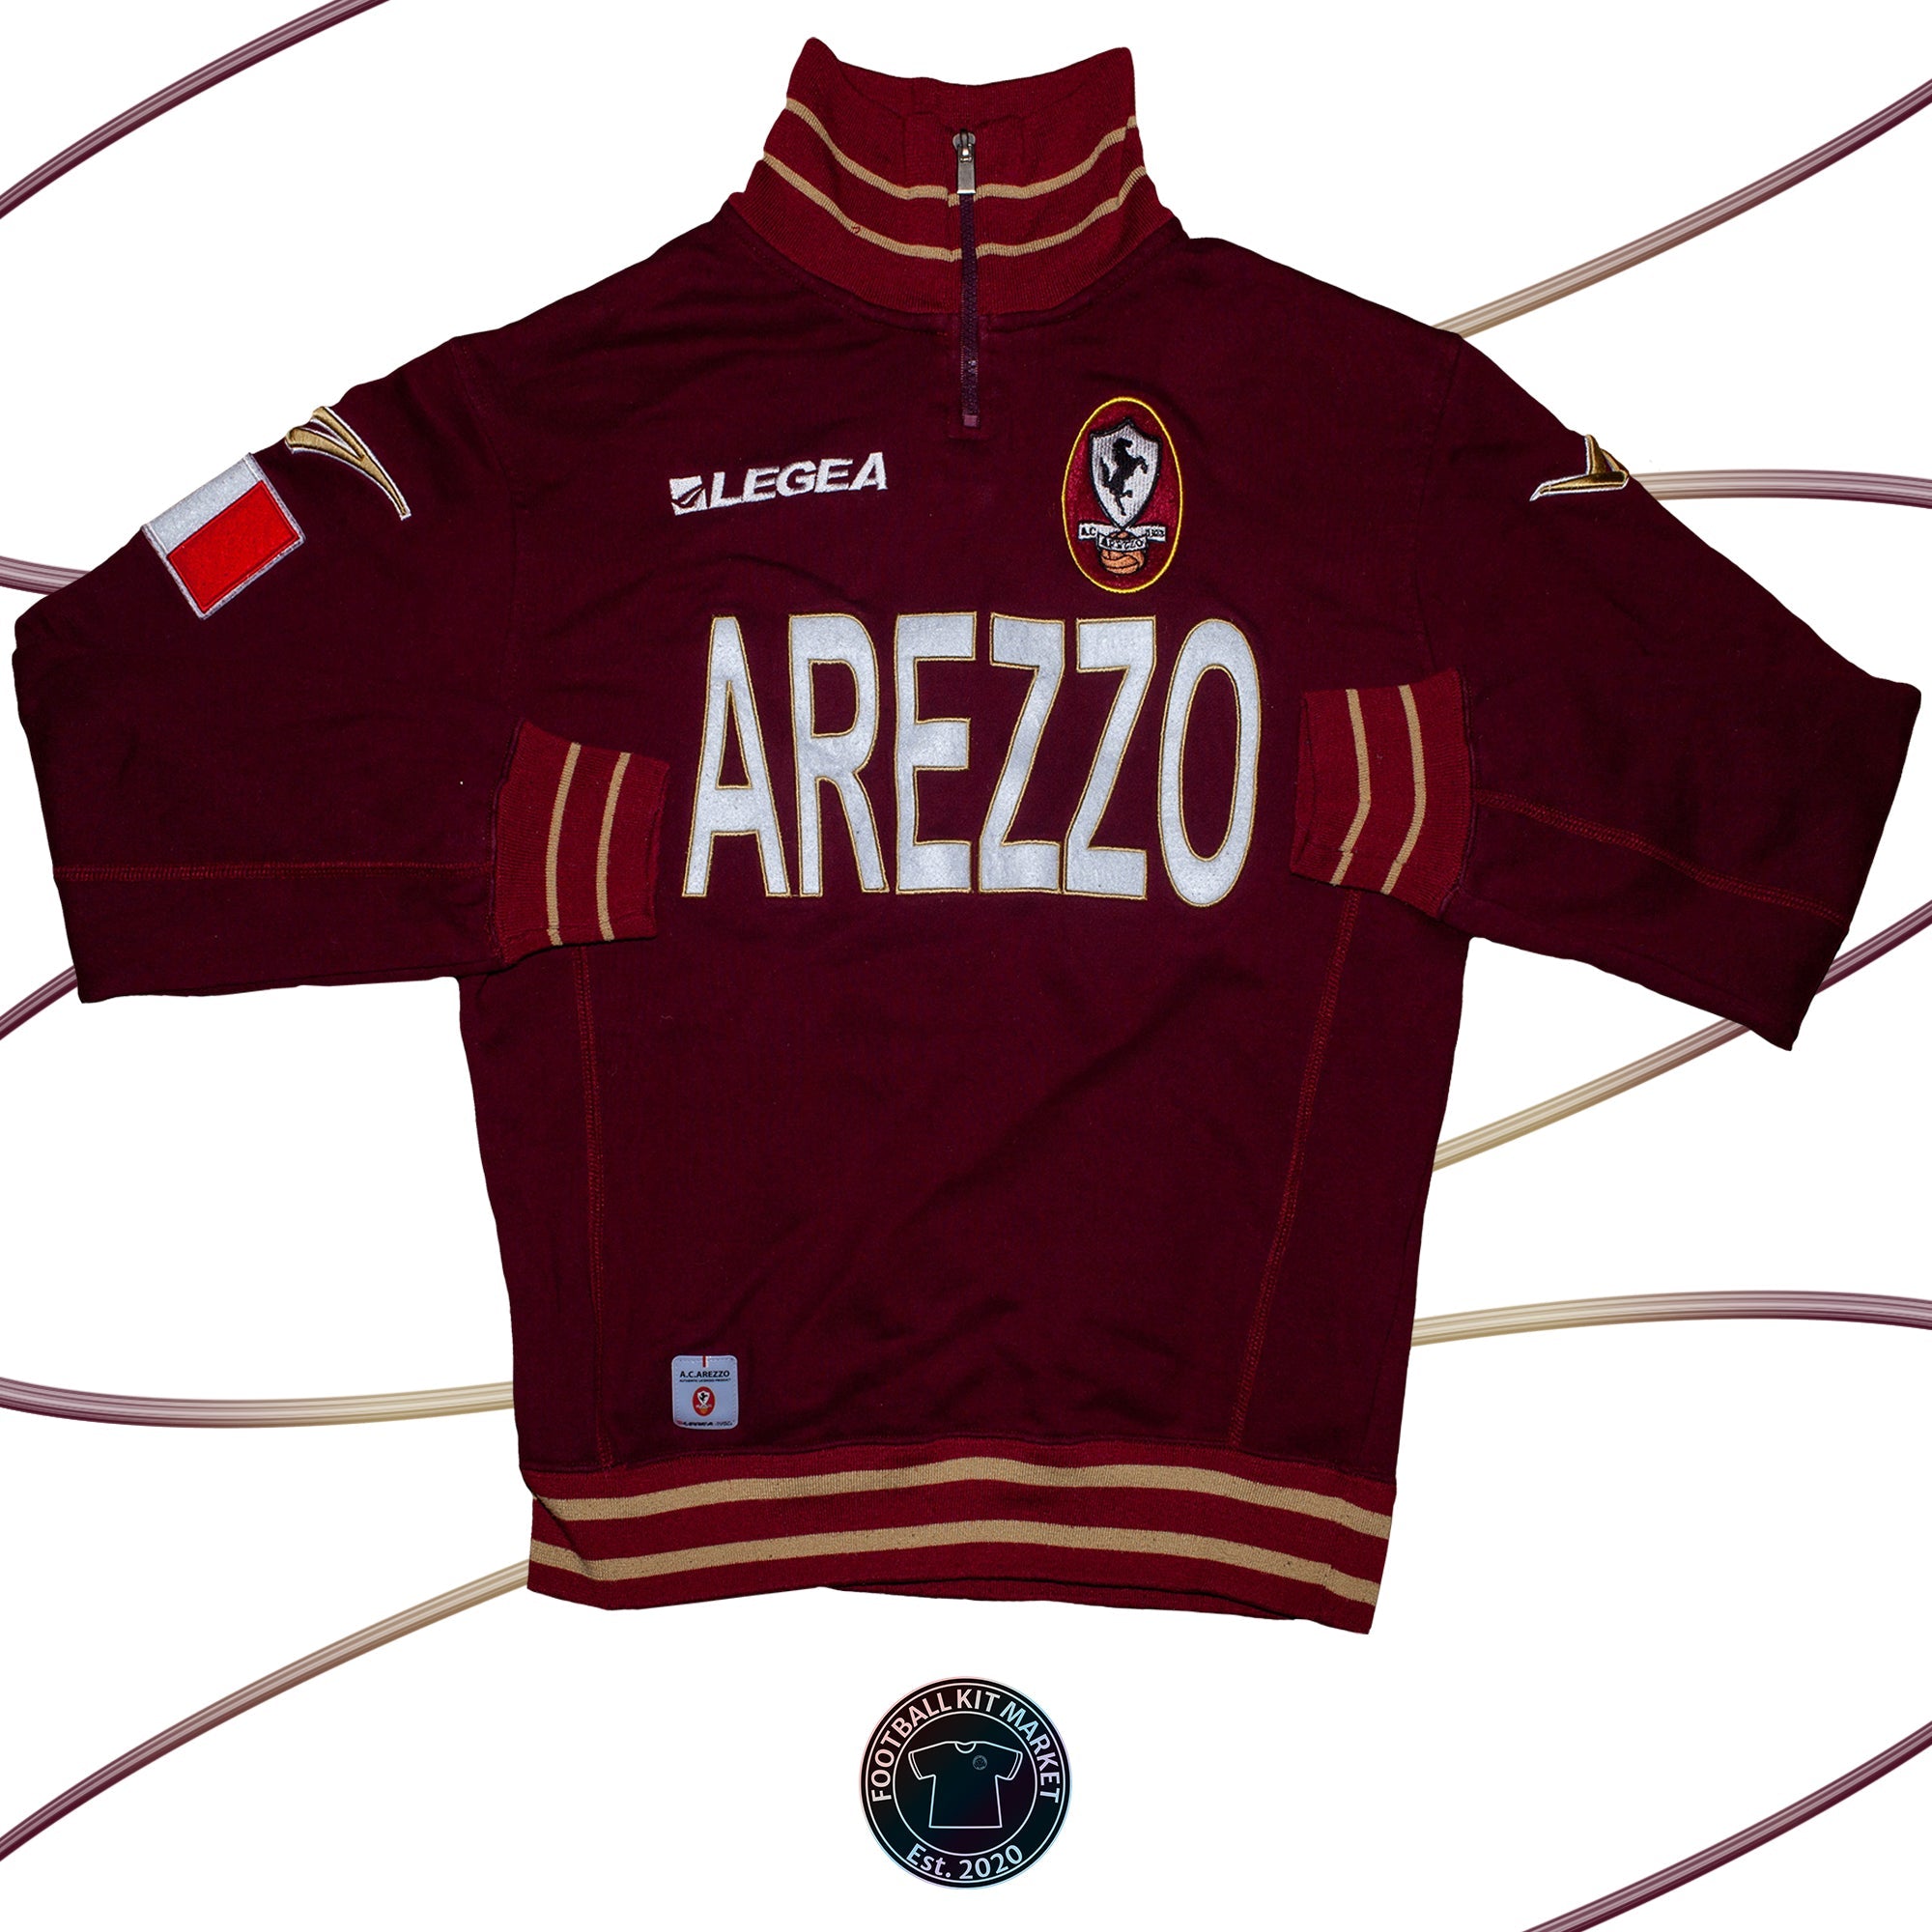 Genuine AC AREZZO Jumper (2006-2007) - LEGEA (M) - Product Image from Football Kit Market